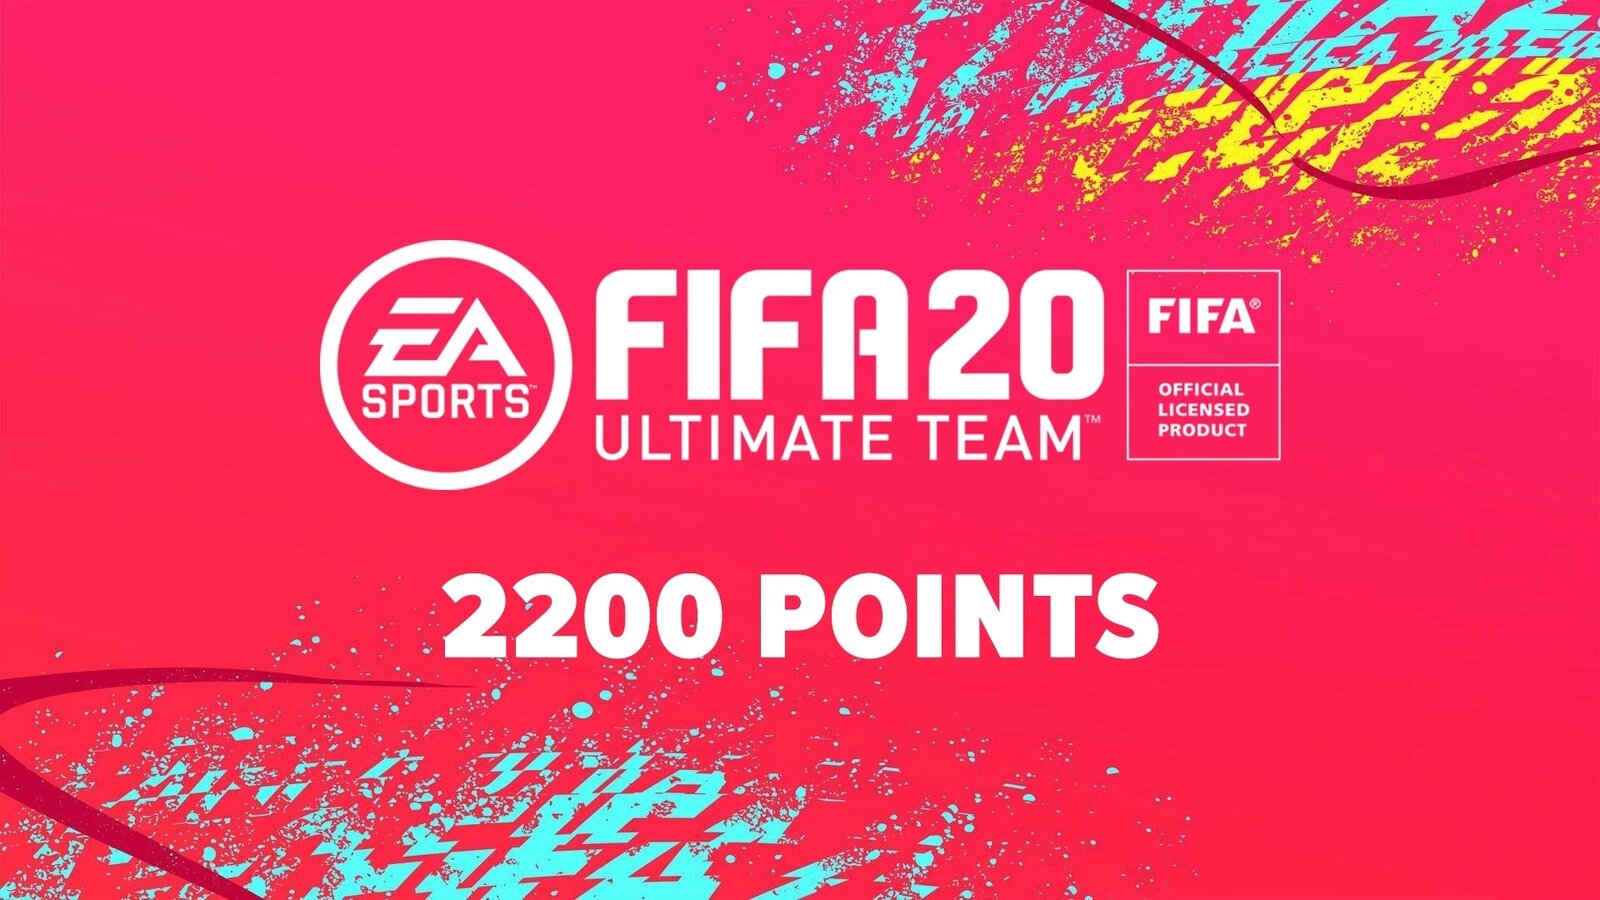 FIFA 20 Ultimate Team - FUT Points 2200